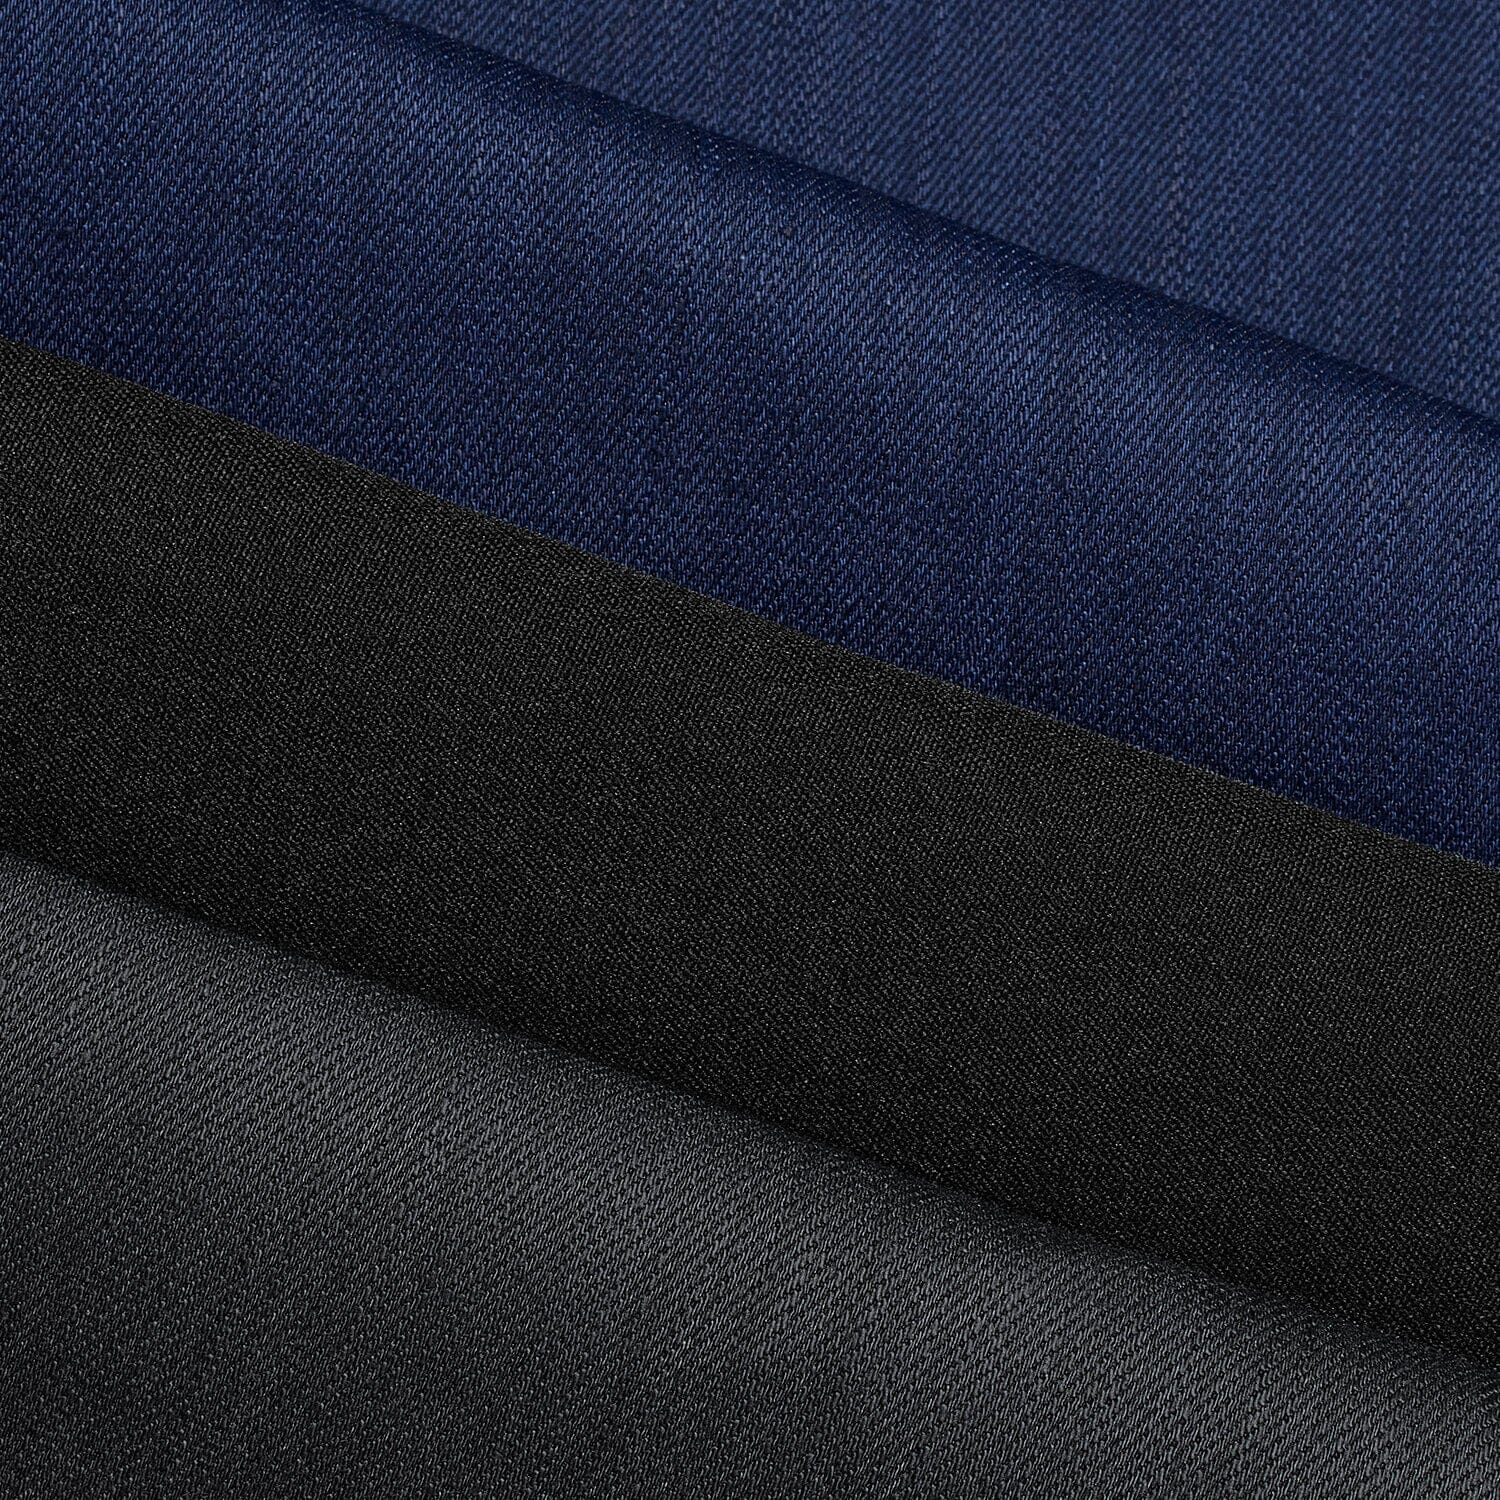 GBF Denim (8 colors) - Fishman's Fabrics